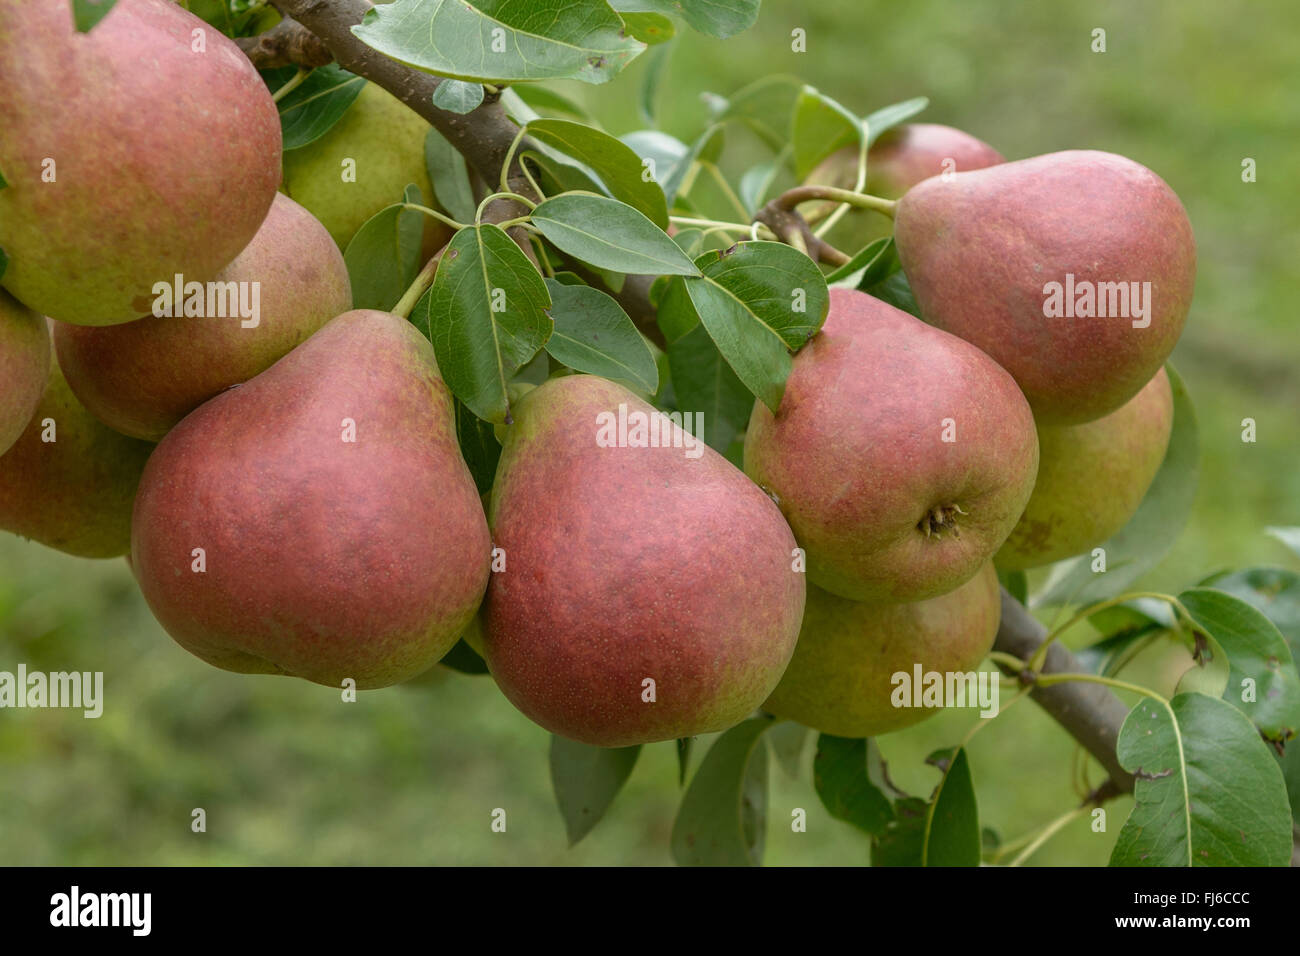 Common pear (Pyrus communis 'Dicolor', Pyrus communis Dicolor), pears on a tree, cultivar Dicolor, Germany Stock Photo